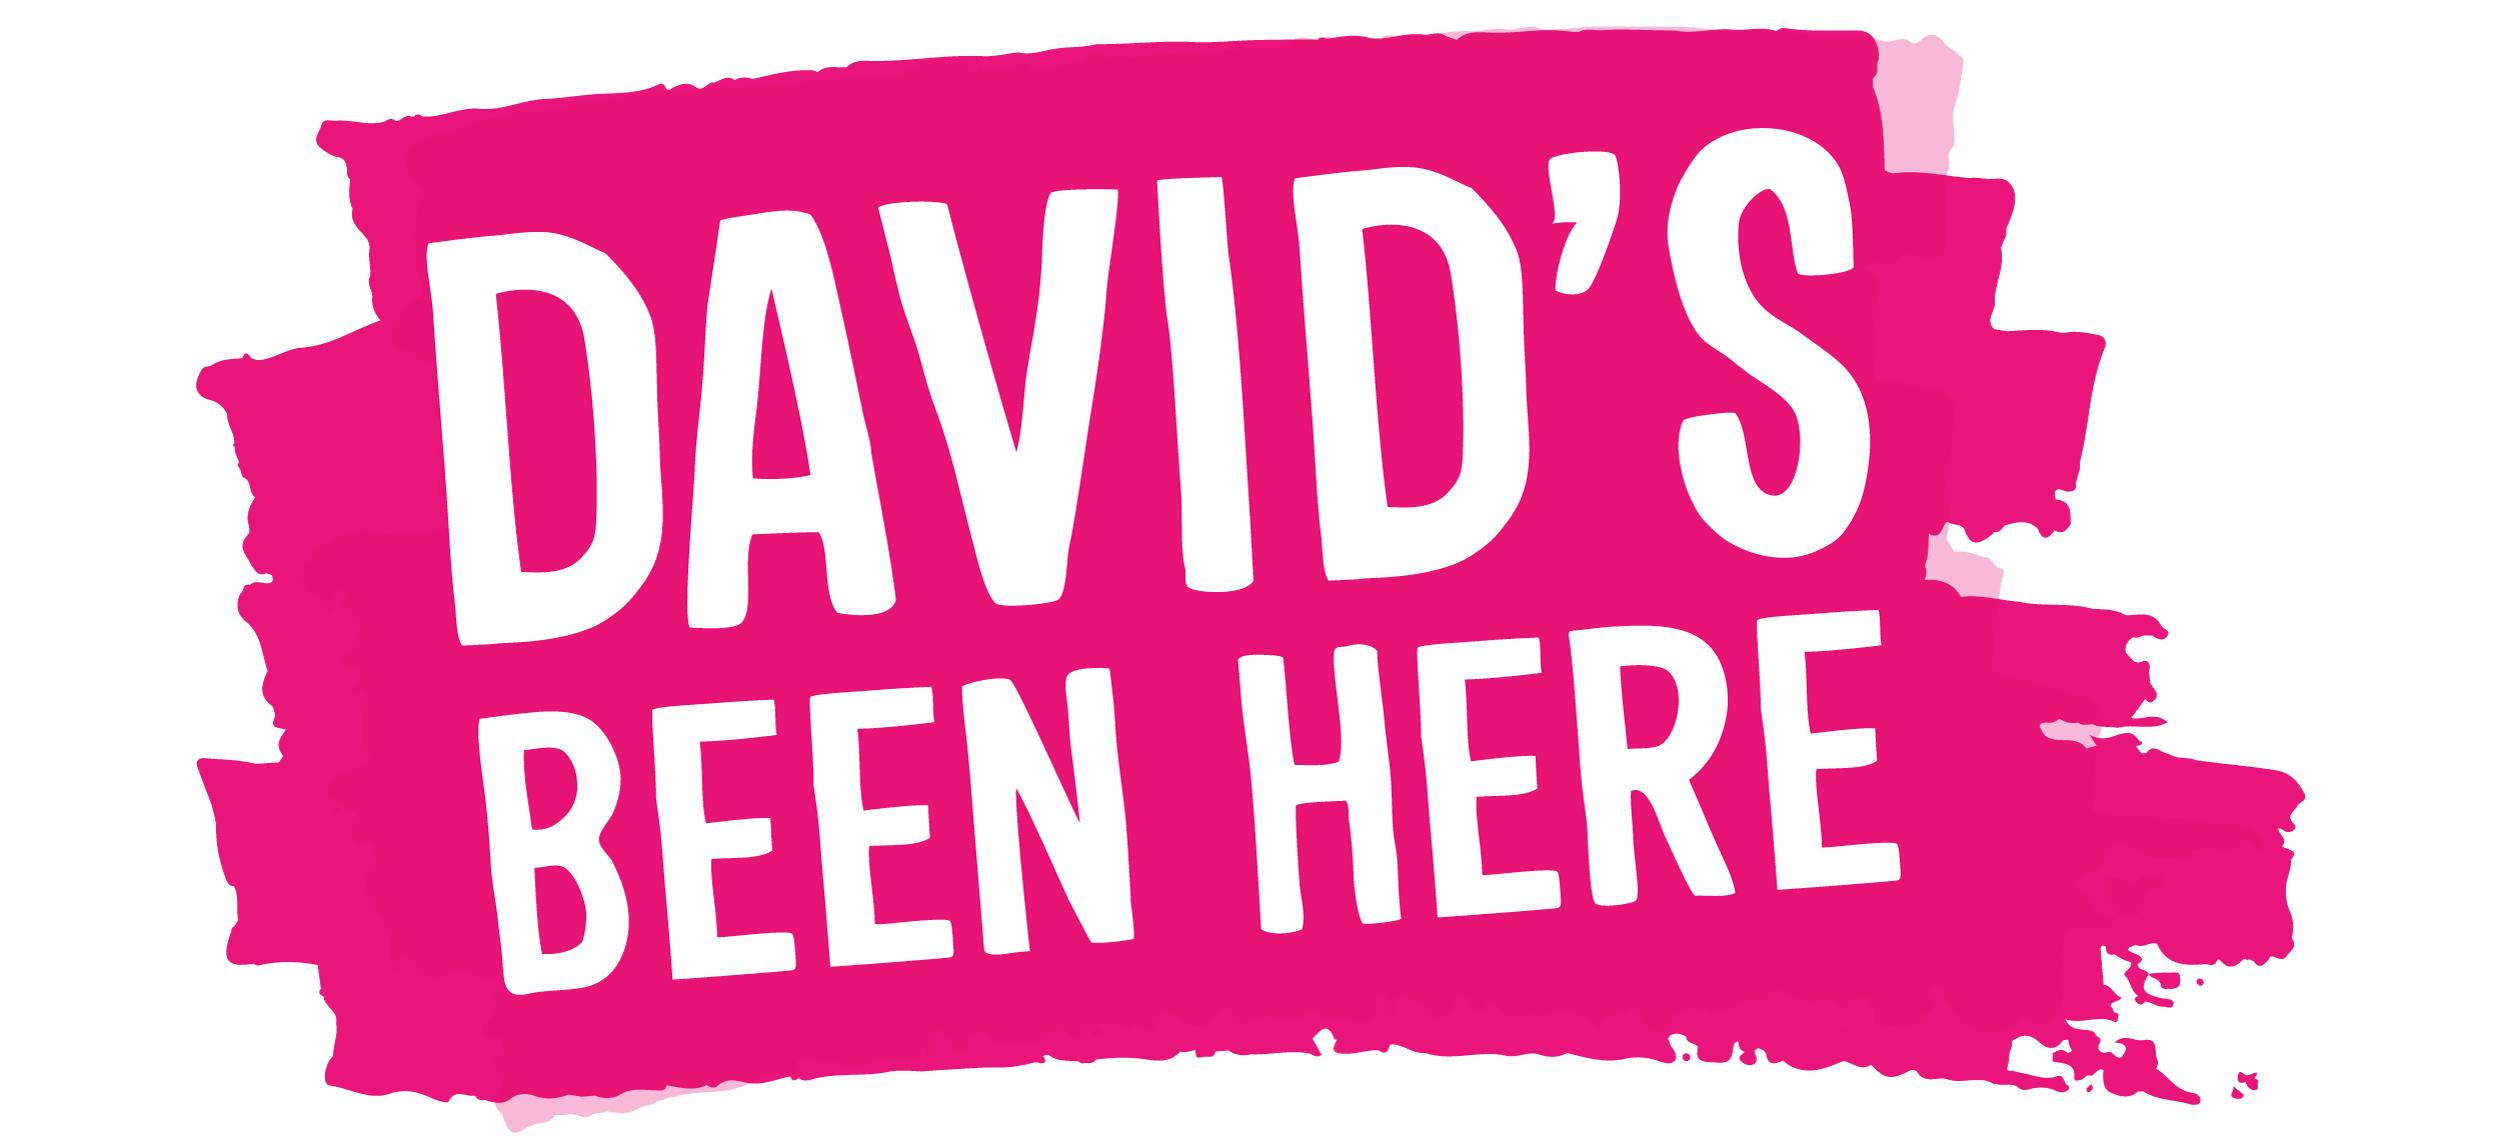 davids been here logo